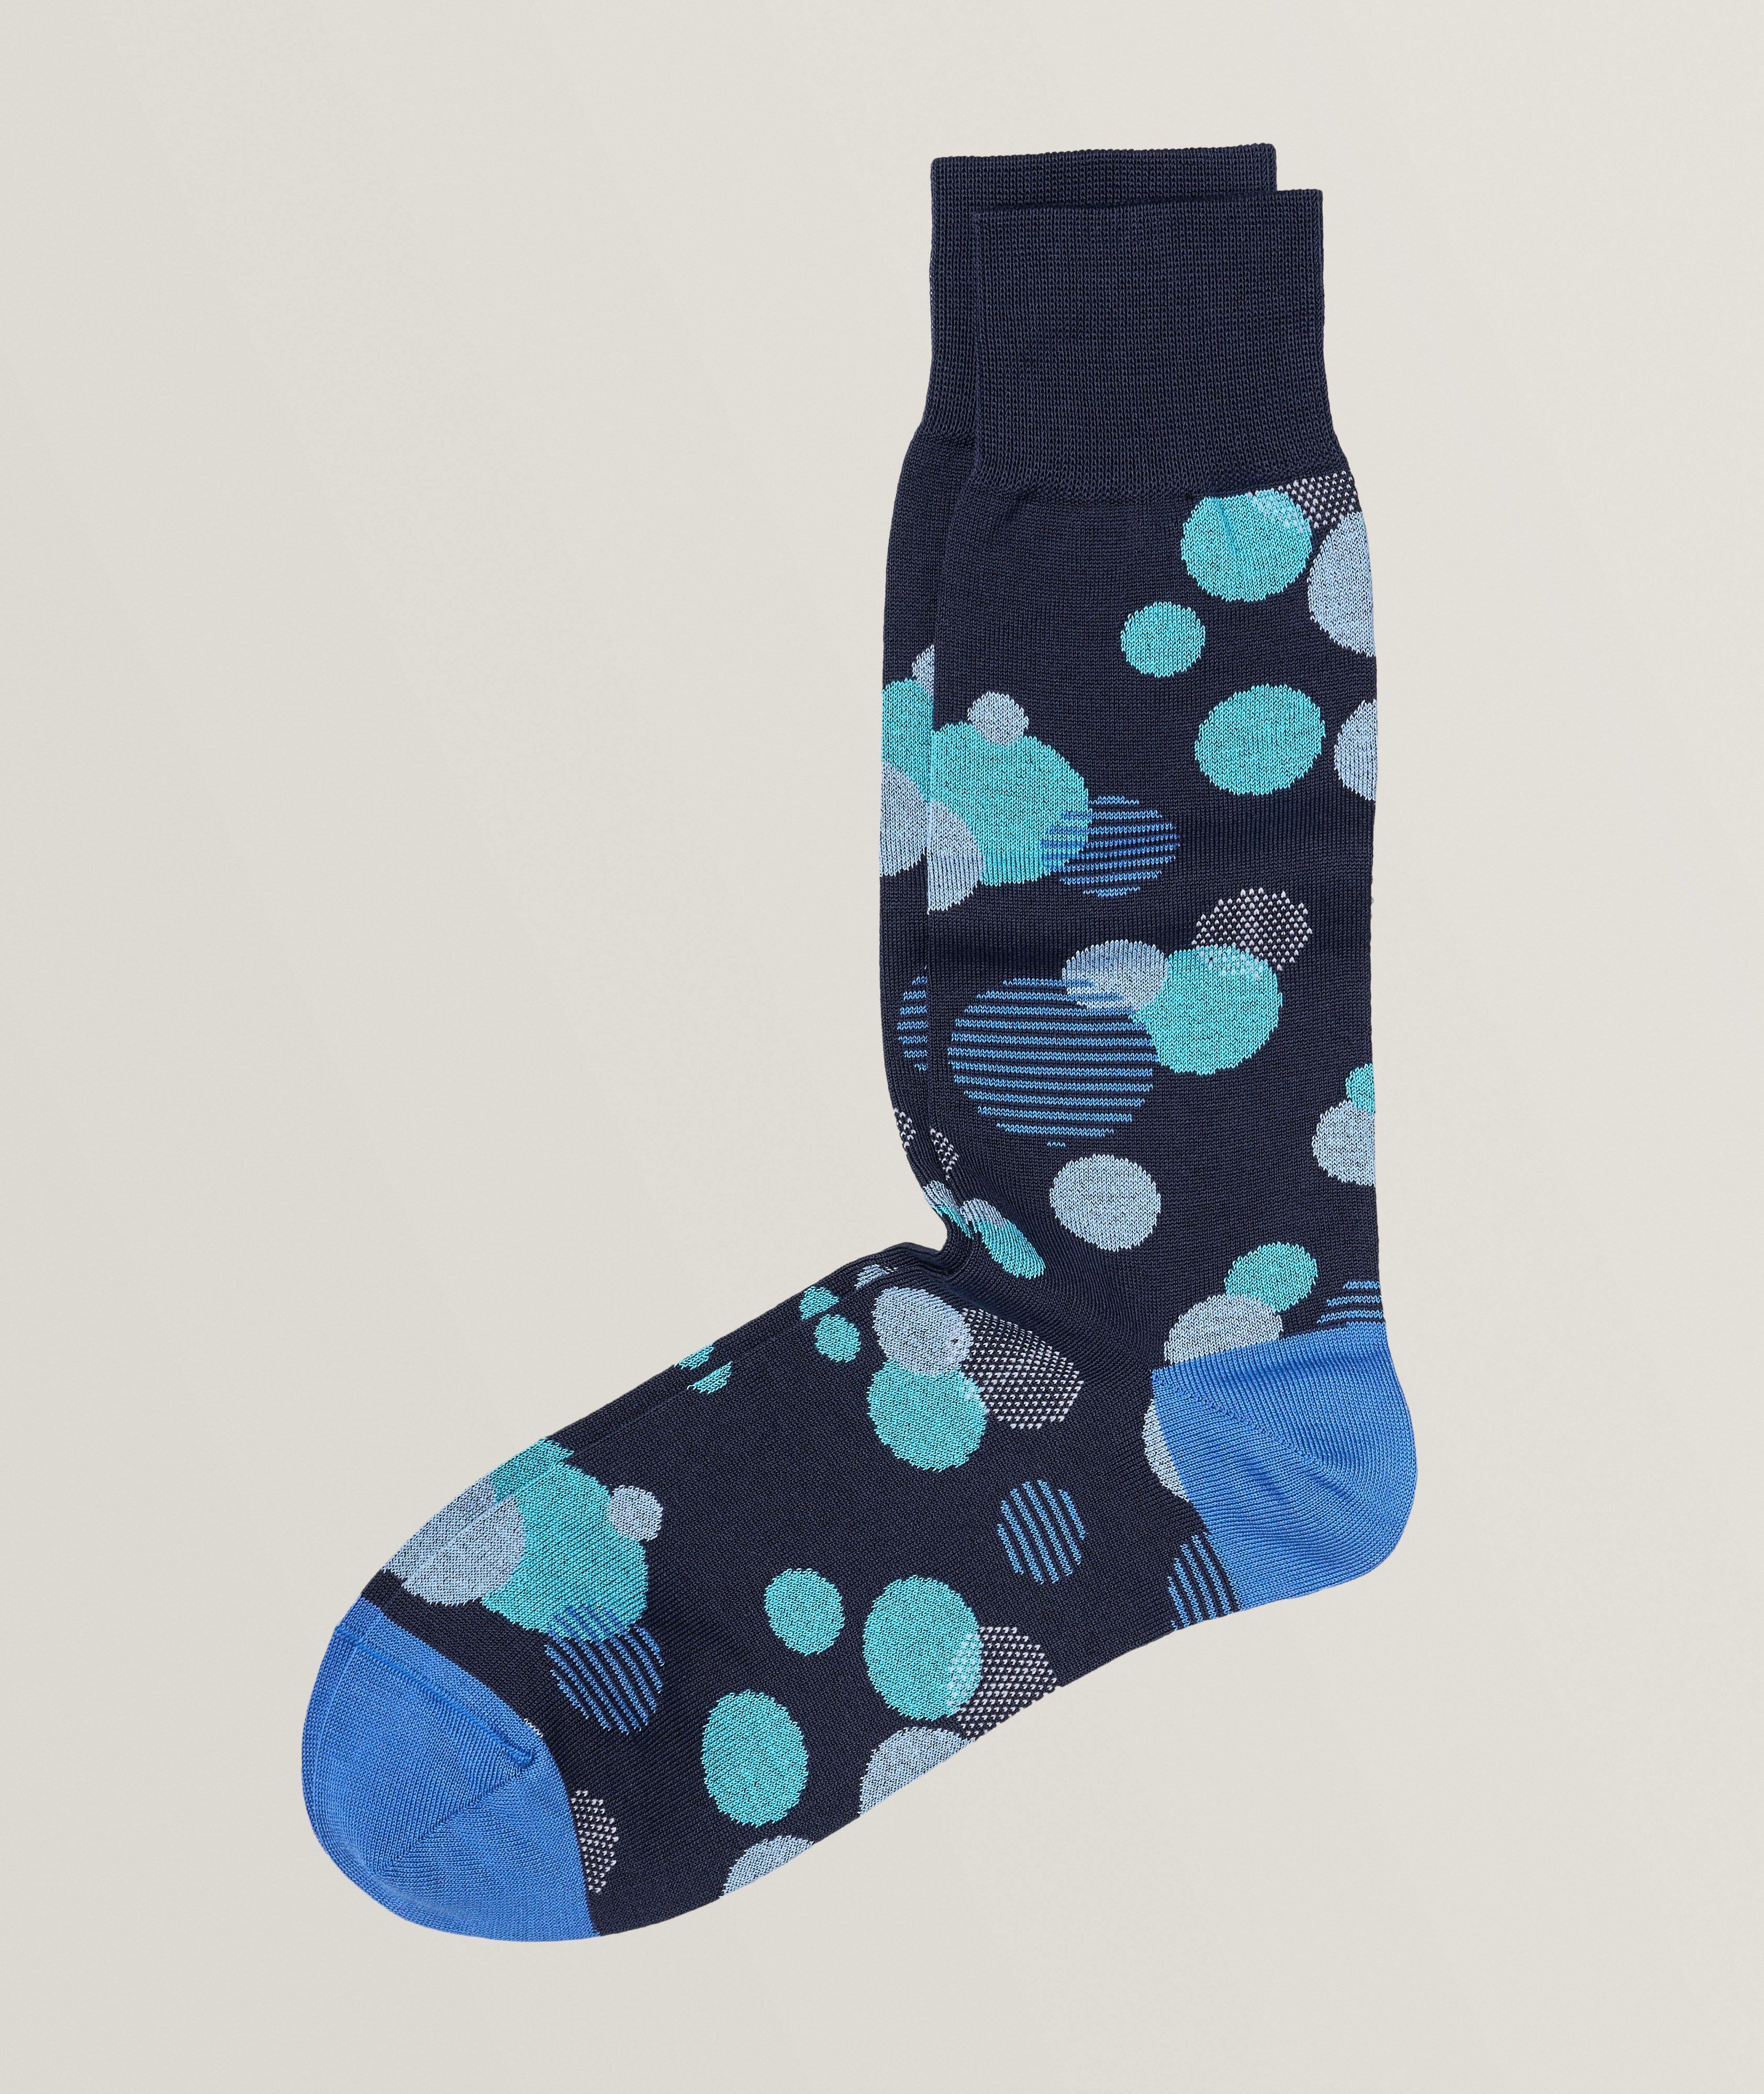 Circle Pattern Mercerised Cotton-Blend Dress Socks image 0